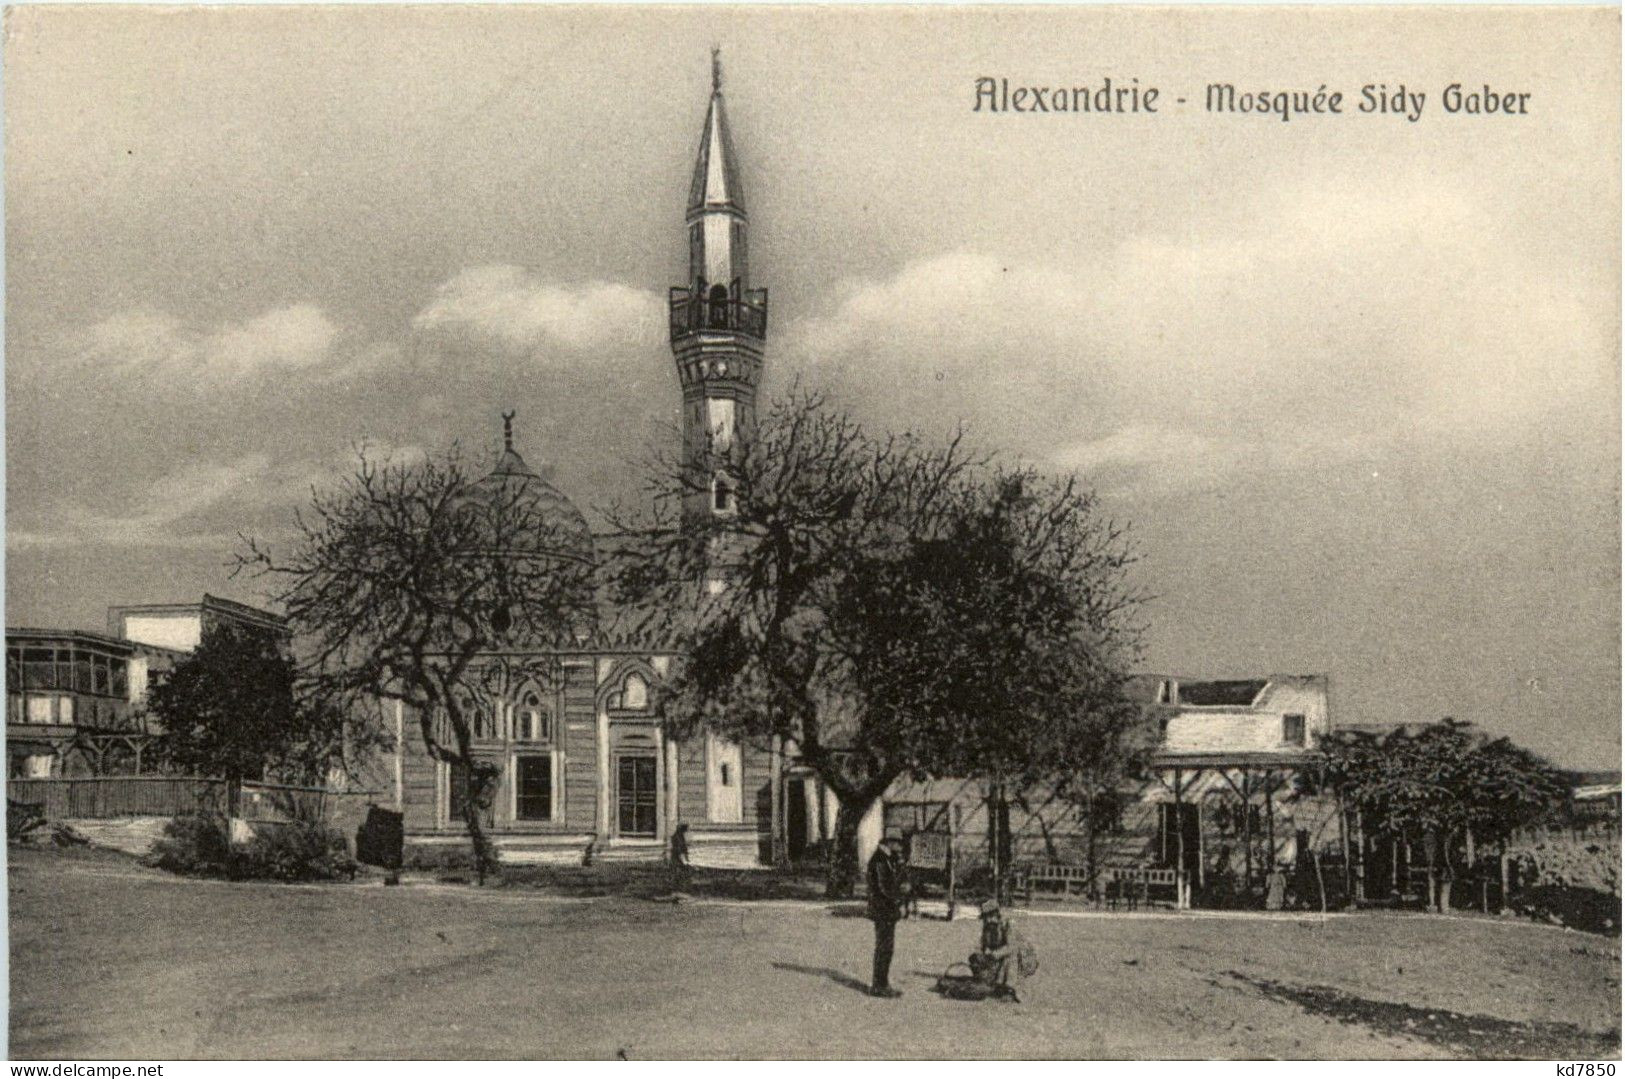 Alexandria - Mosquee Sidy Gaber - Alexandrië